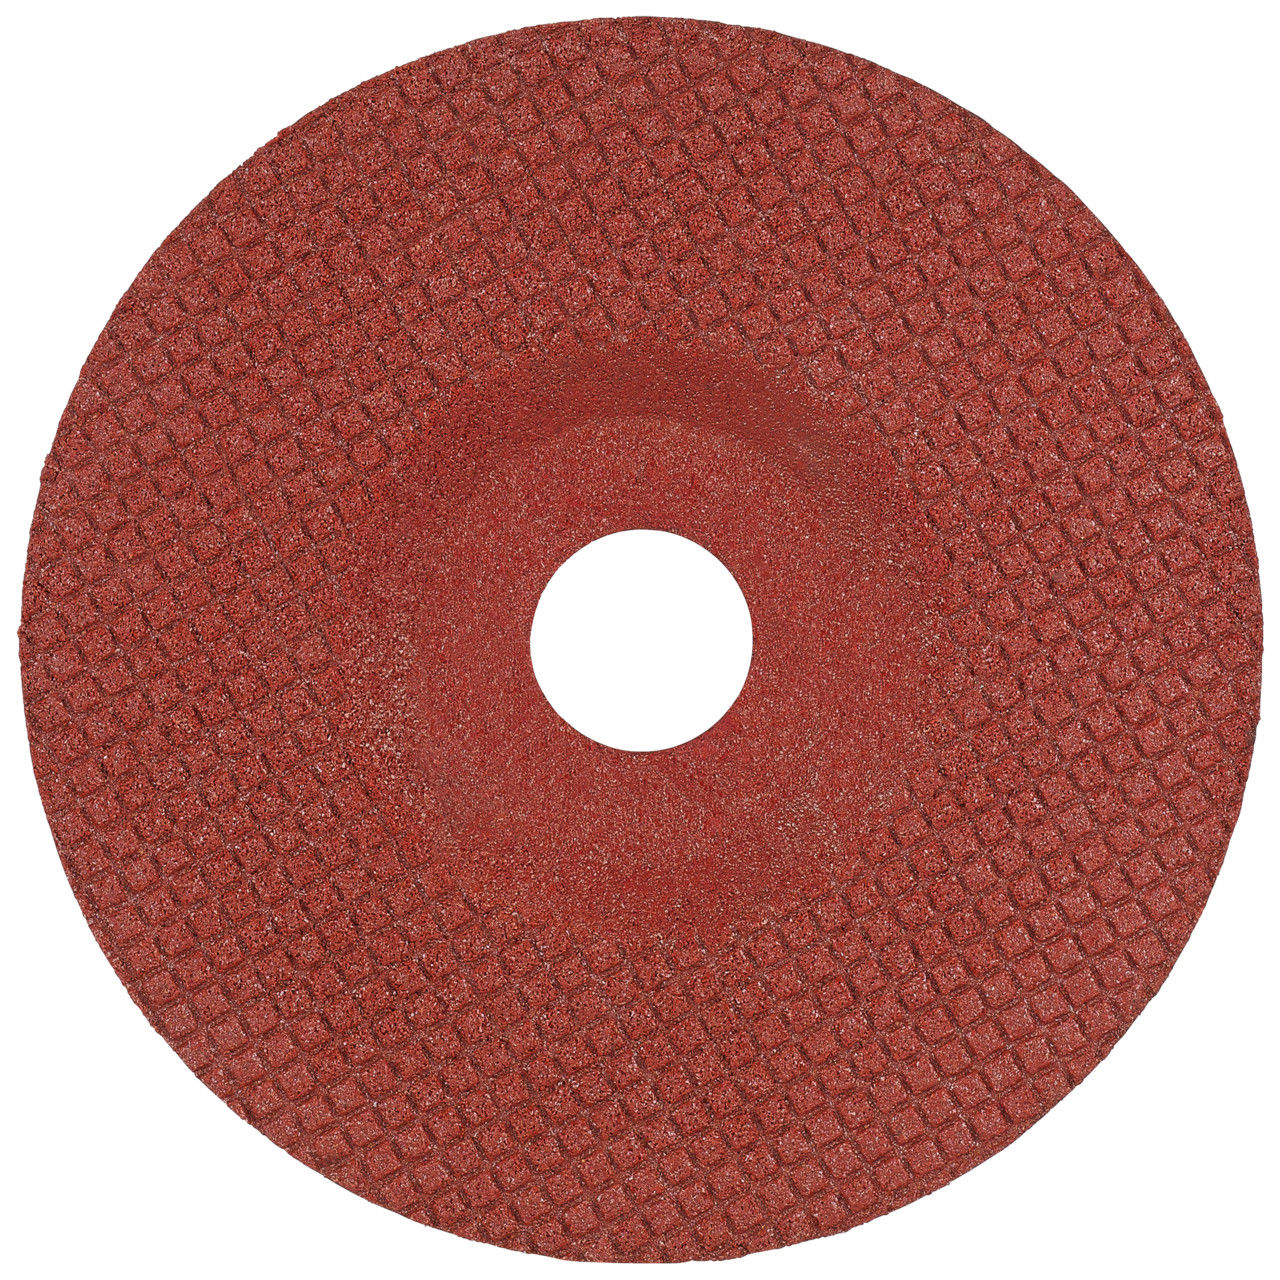 Disco TYROLIT DxH 178x22,23 TOUCH per acciaio inox e metalli non ferrosi, forma: 29T - versione offset, Art. 236320